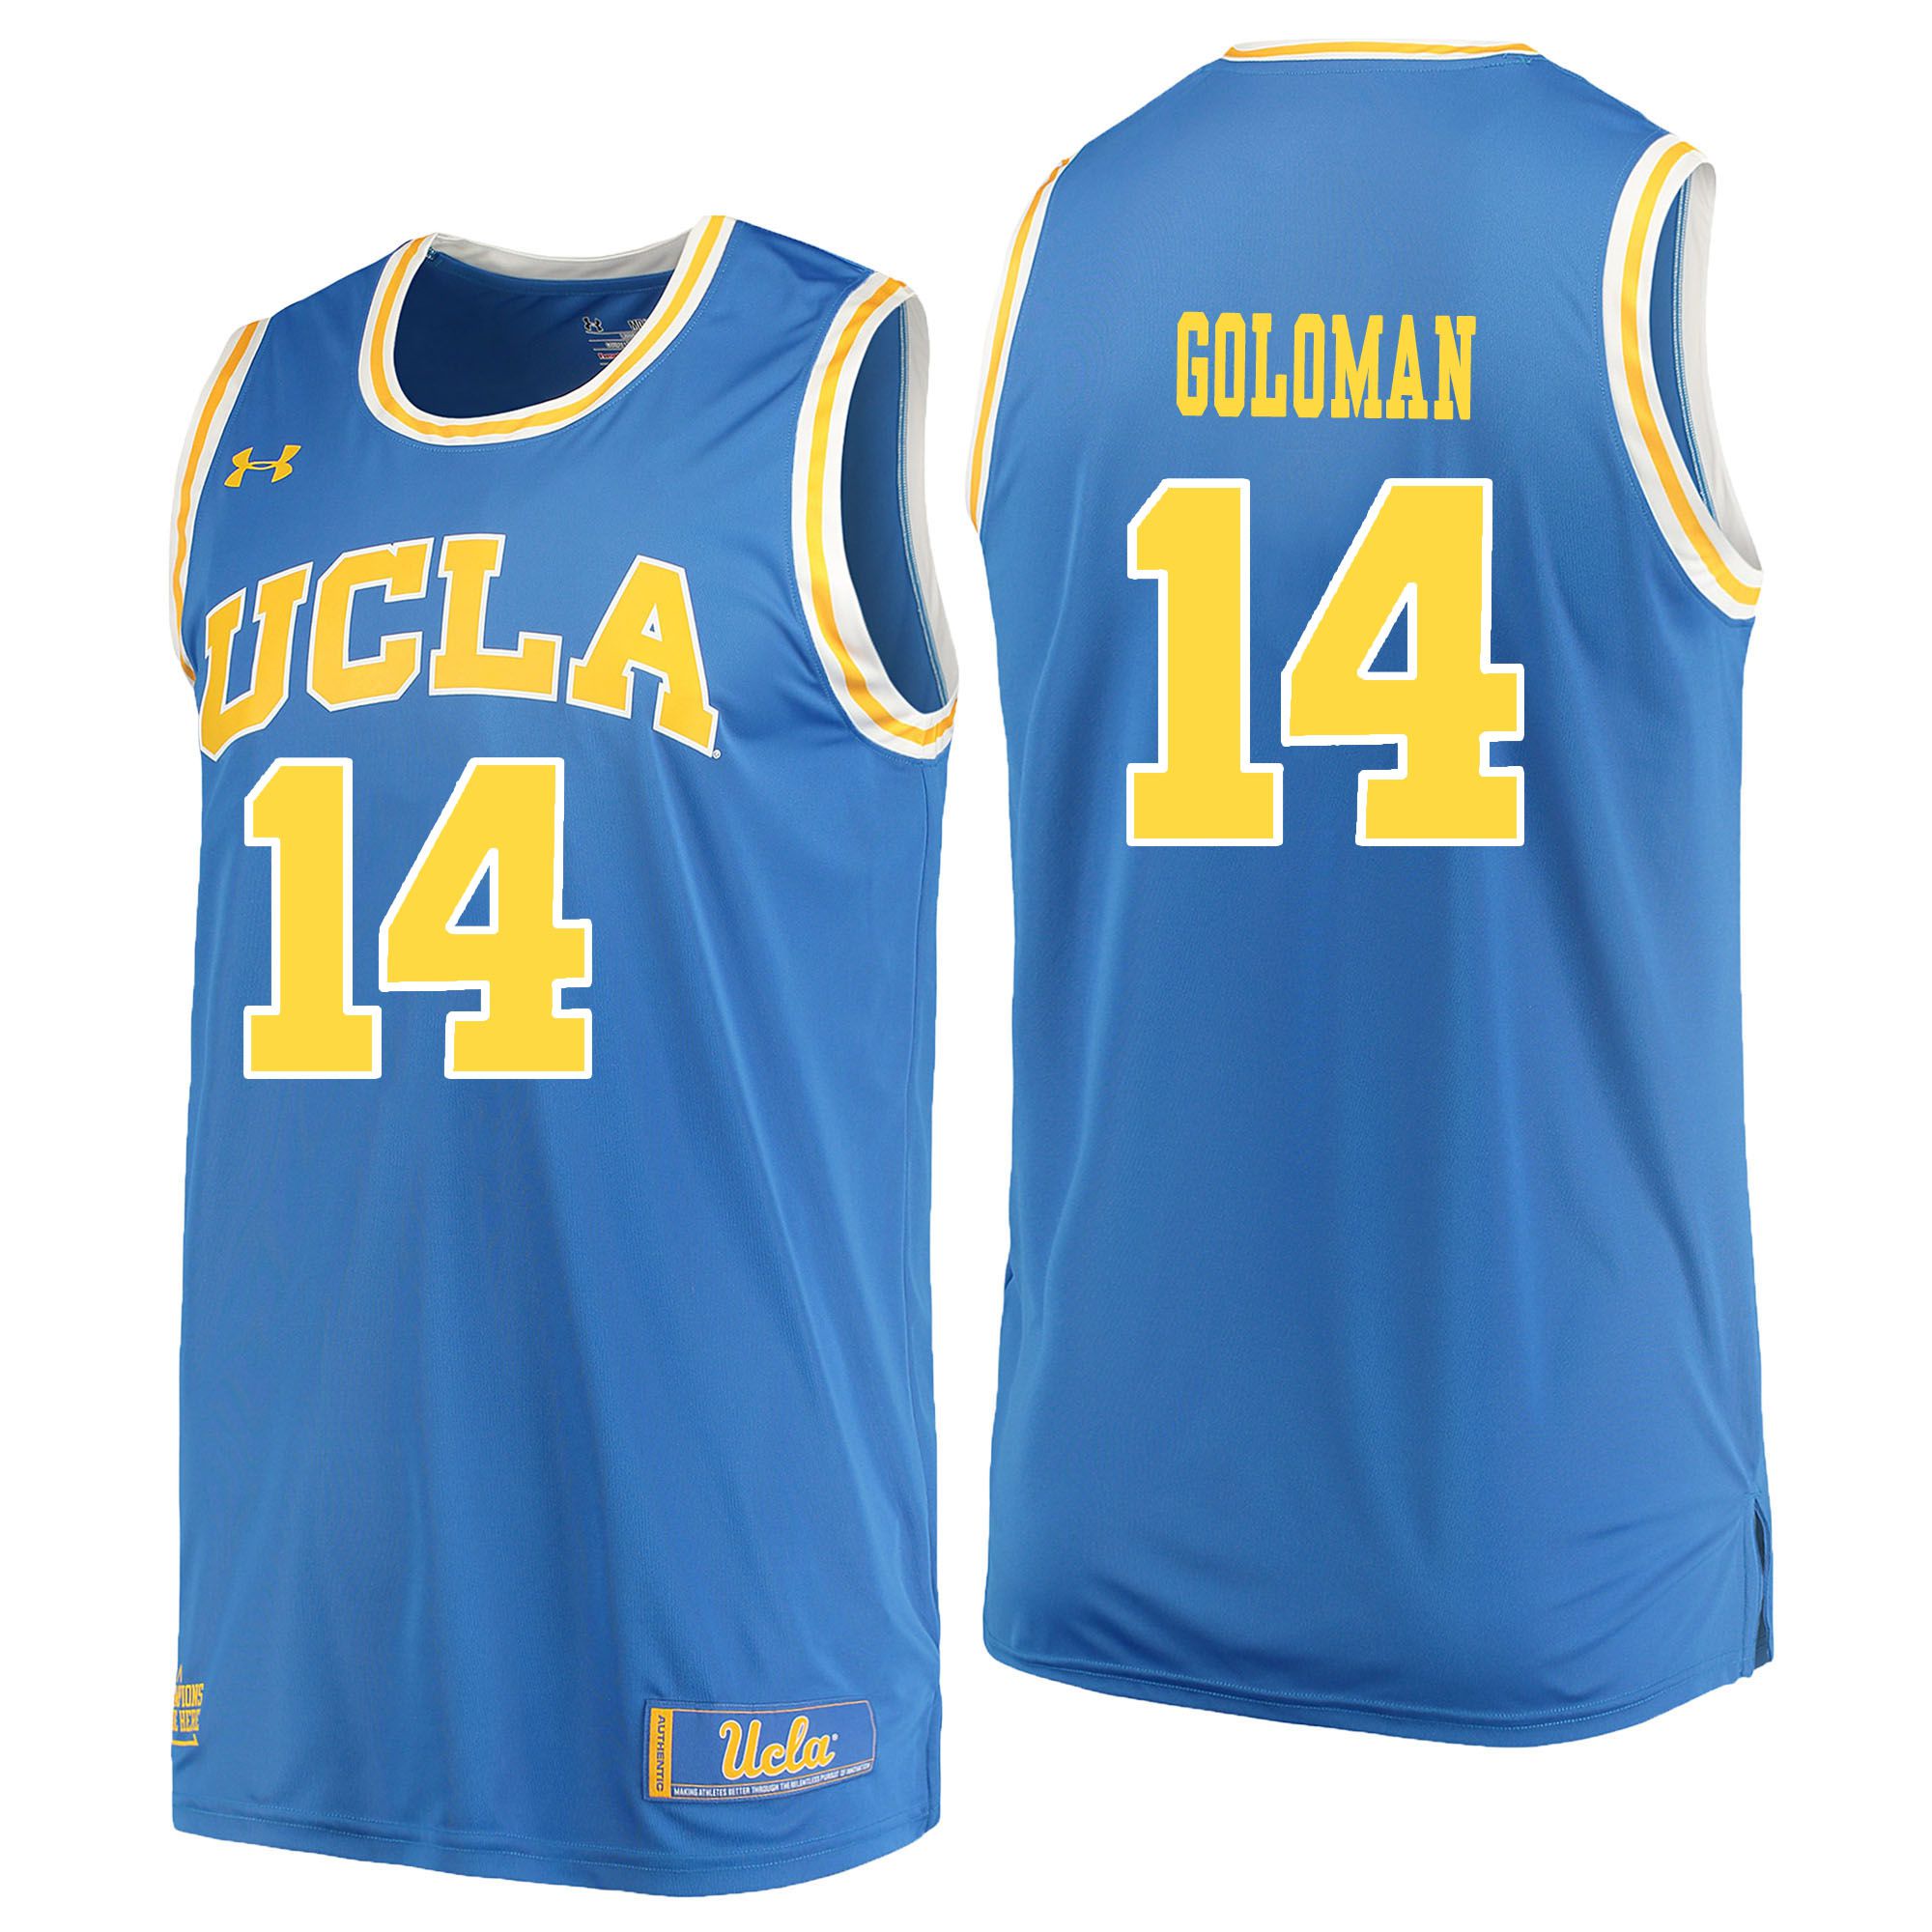 Men UCLA UA 14 Goloman Light Blue Customized NCAA Jerseys